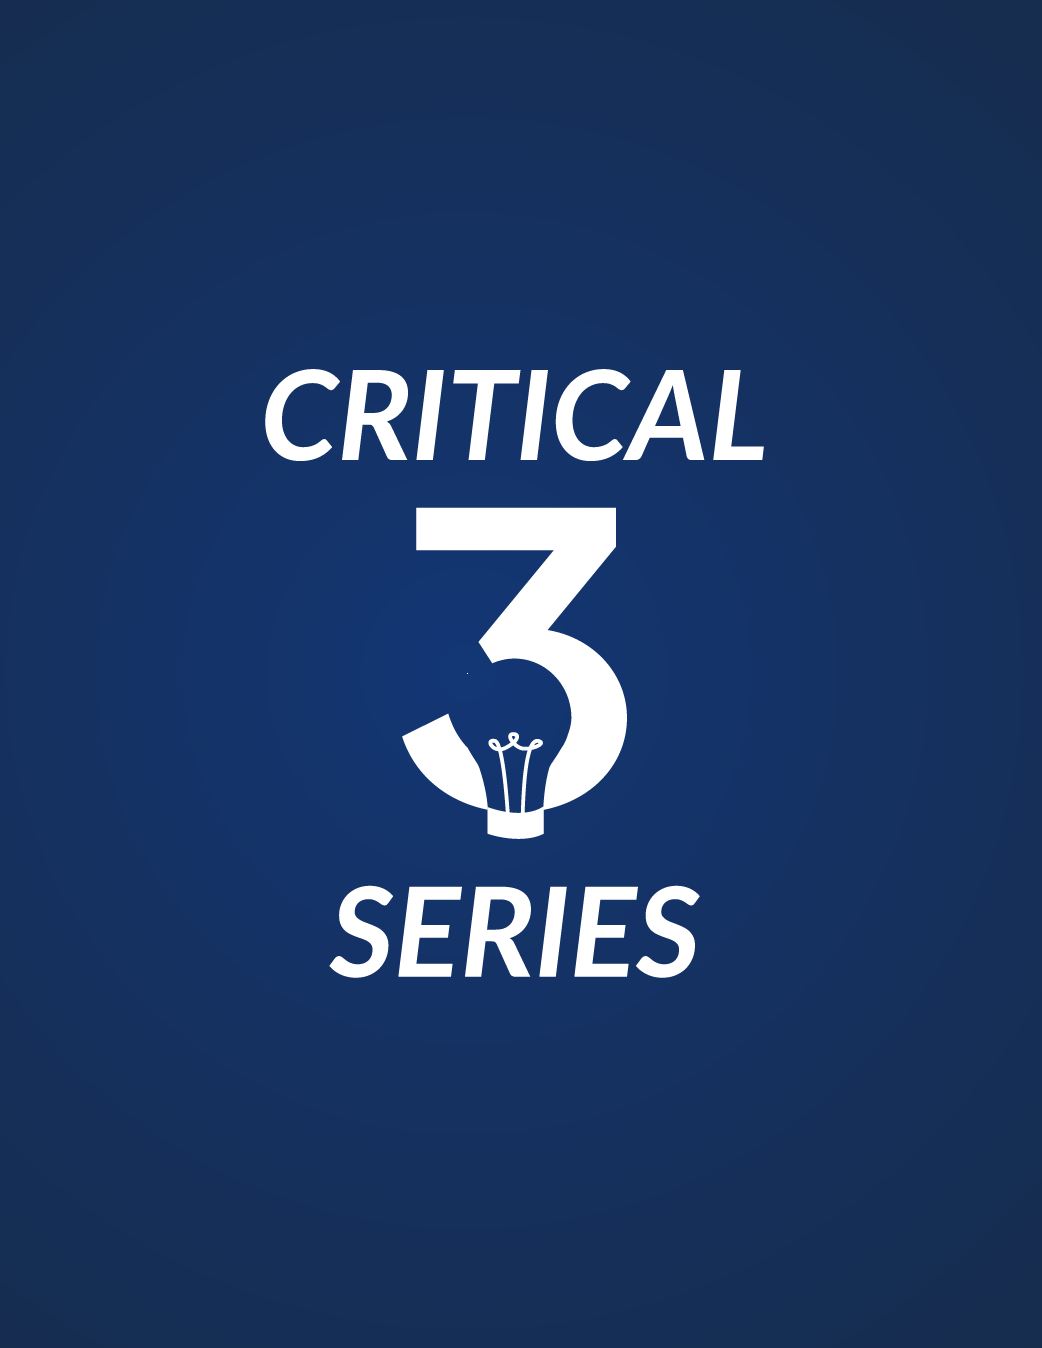 Critical 3 - Effective Organizational Change